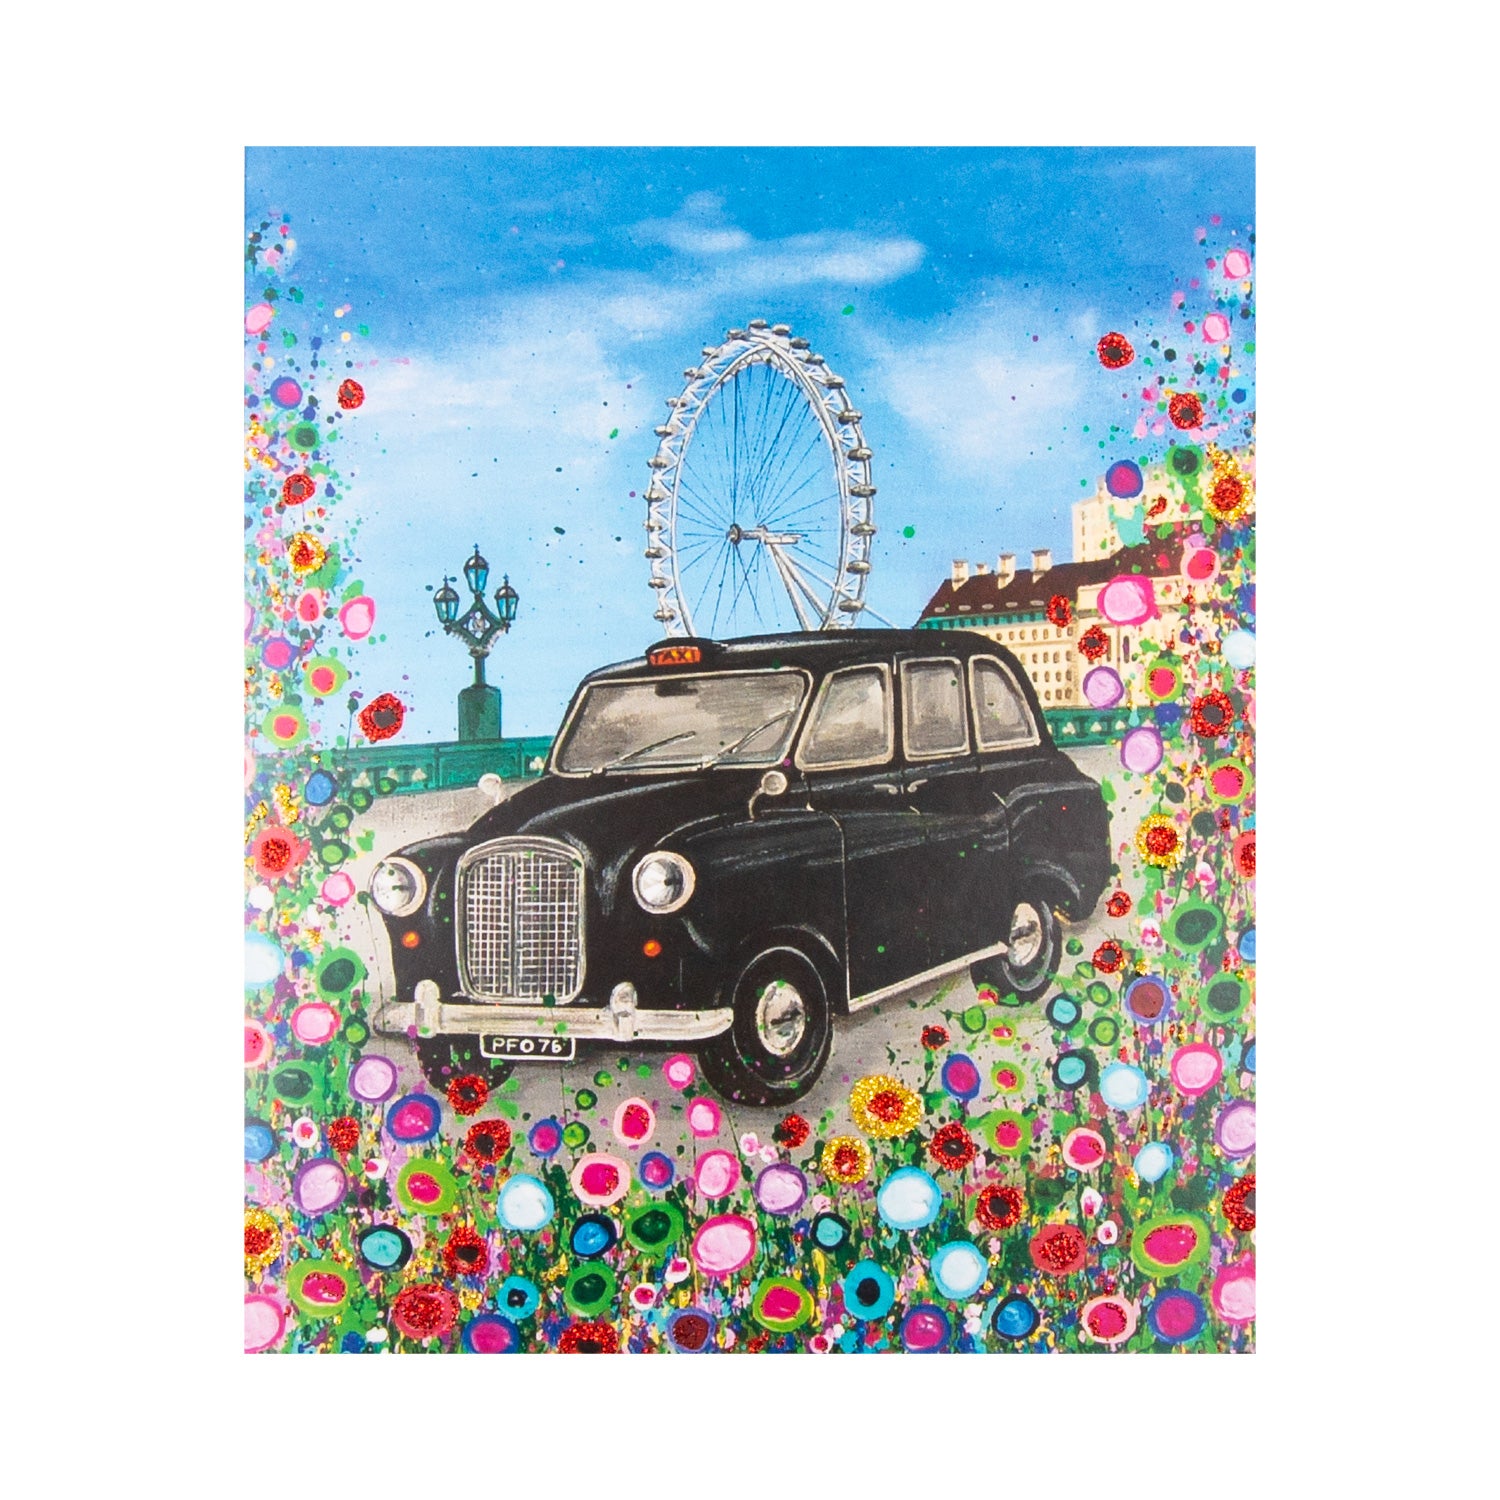 Jo Gough London Greeting Cards - Taxi